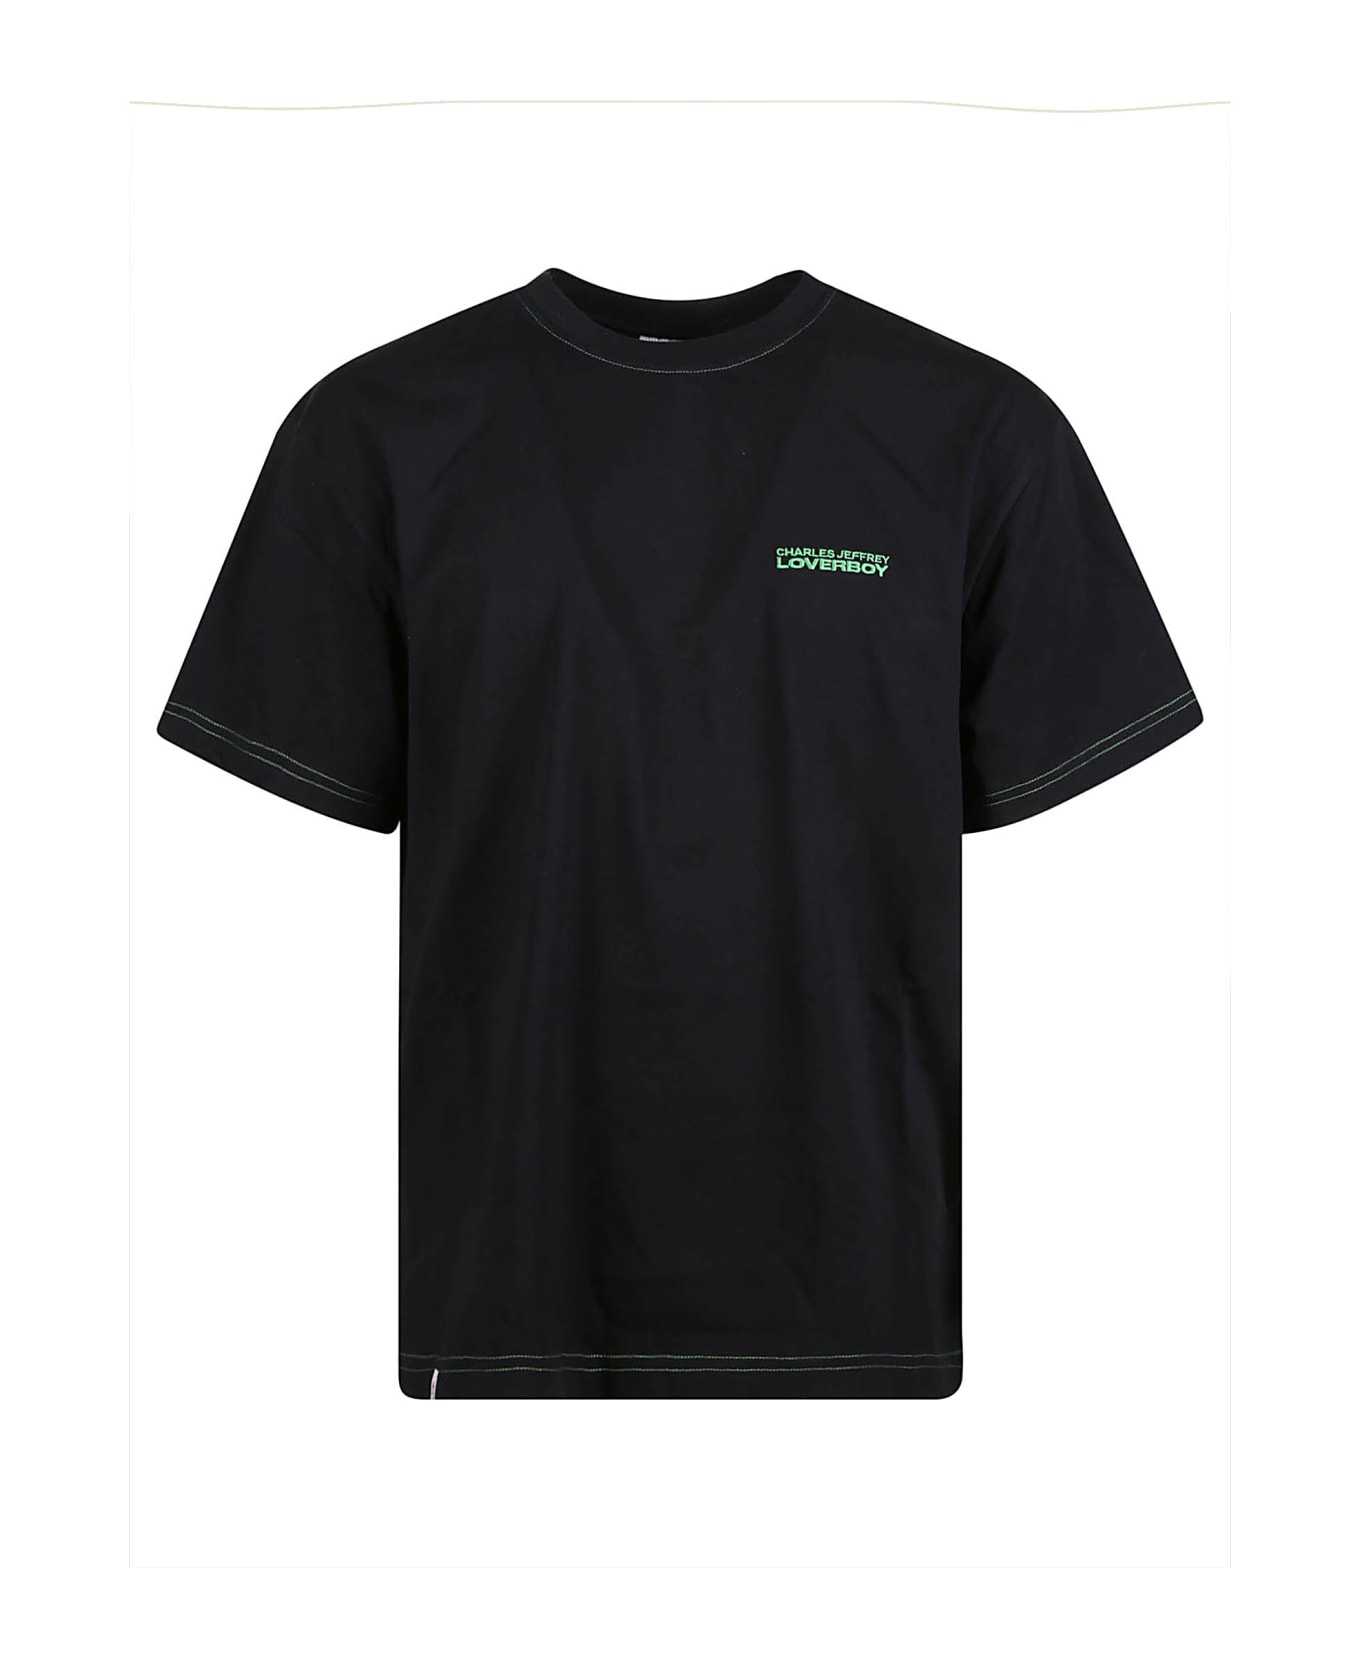 Charles Jeffrey Loverboy Logo Print T-shirt - Black 